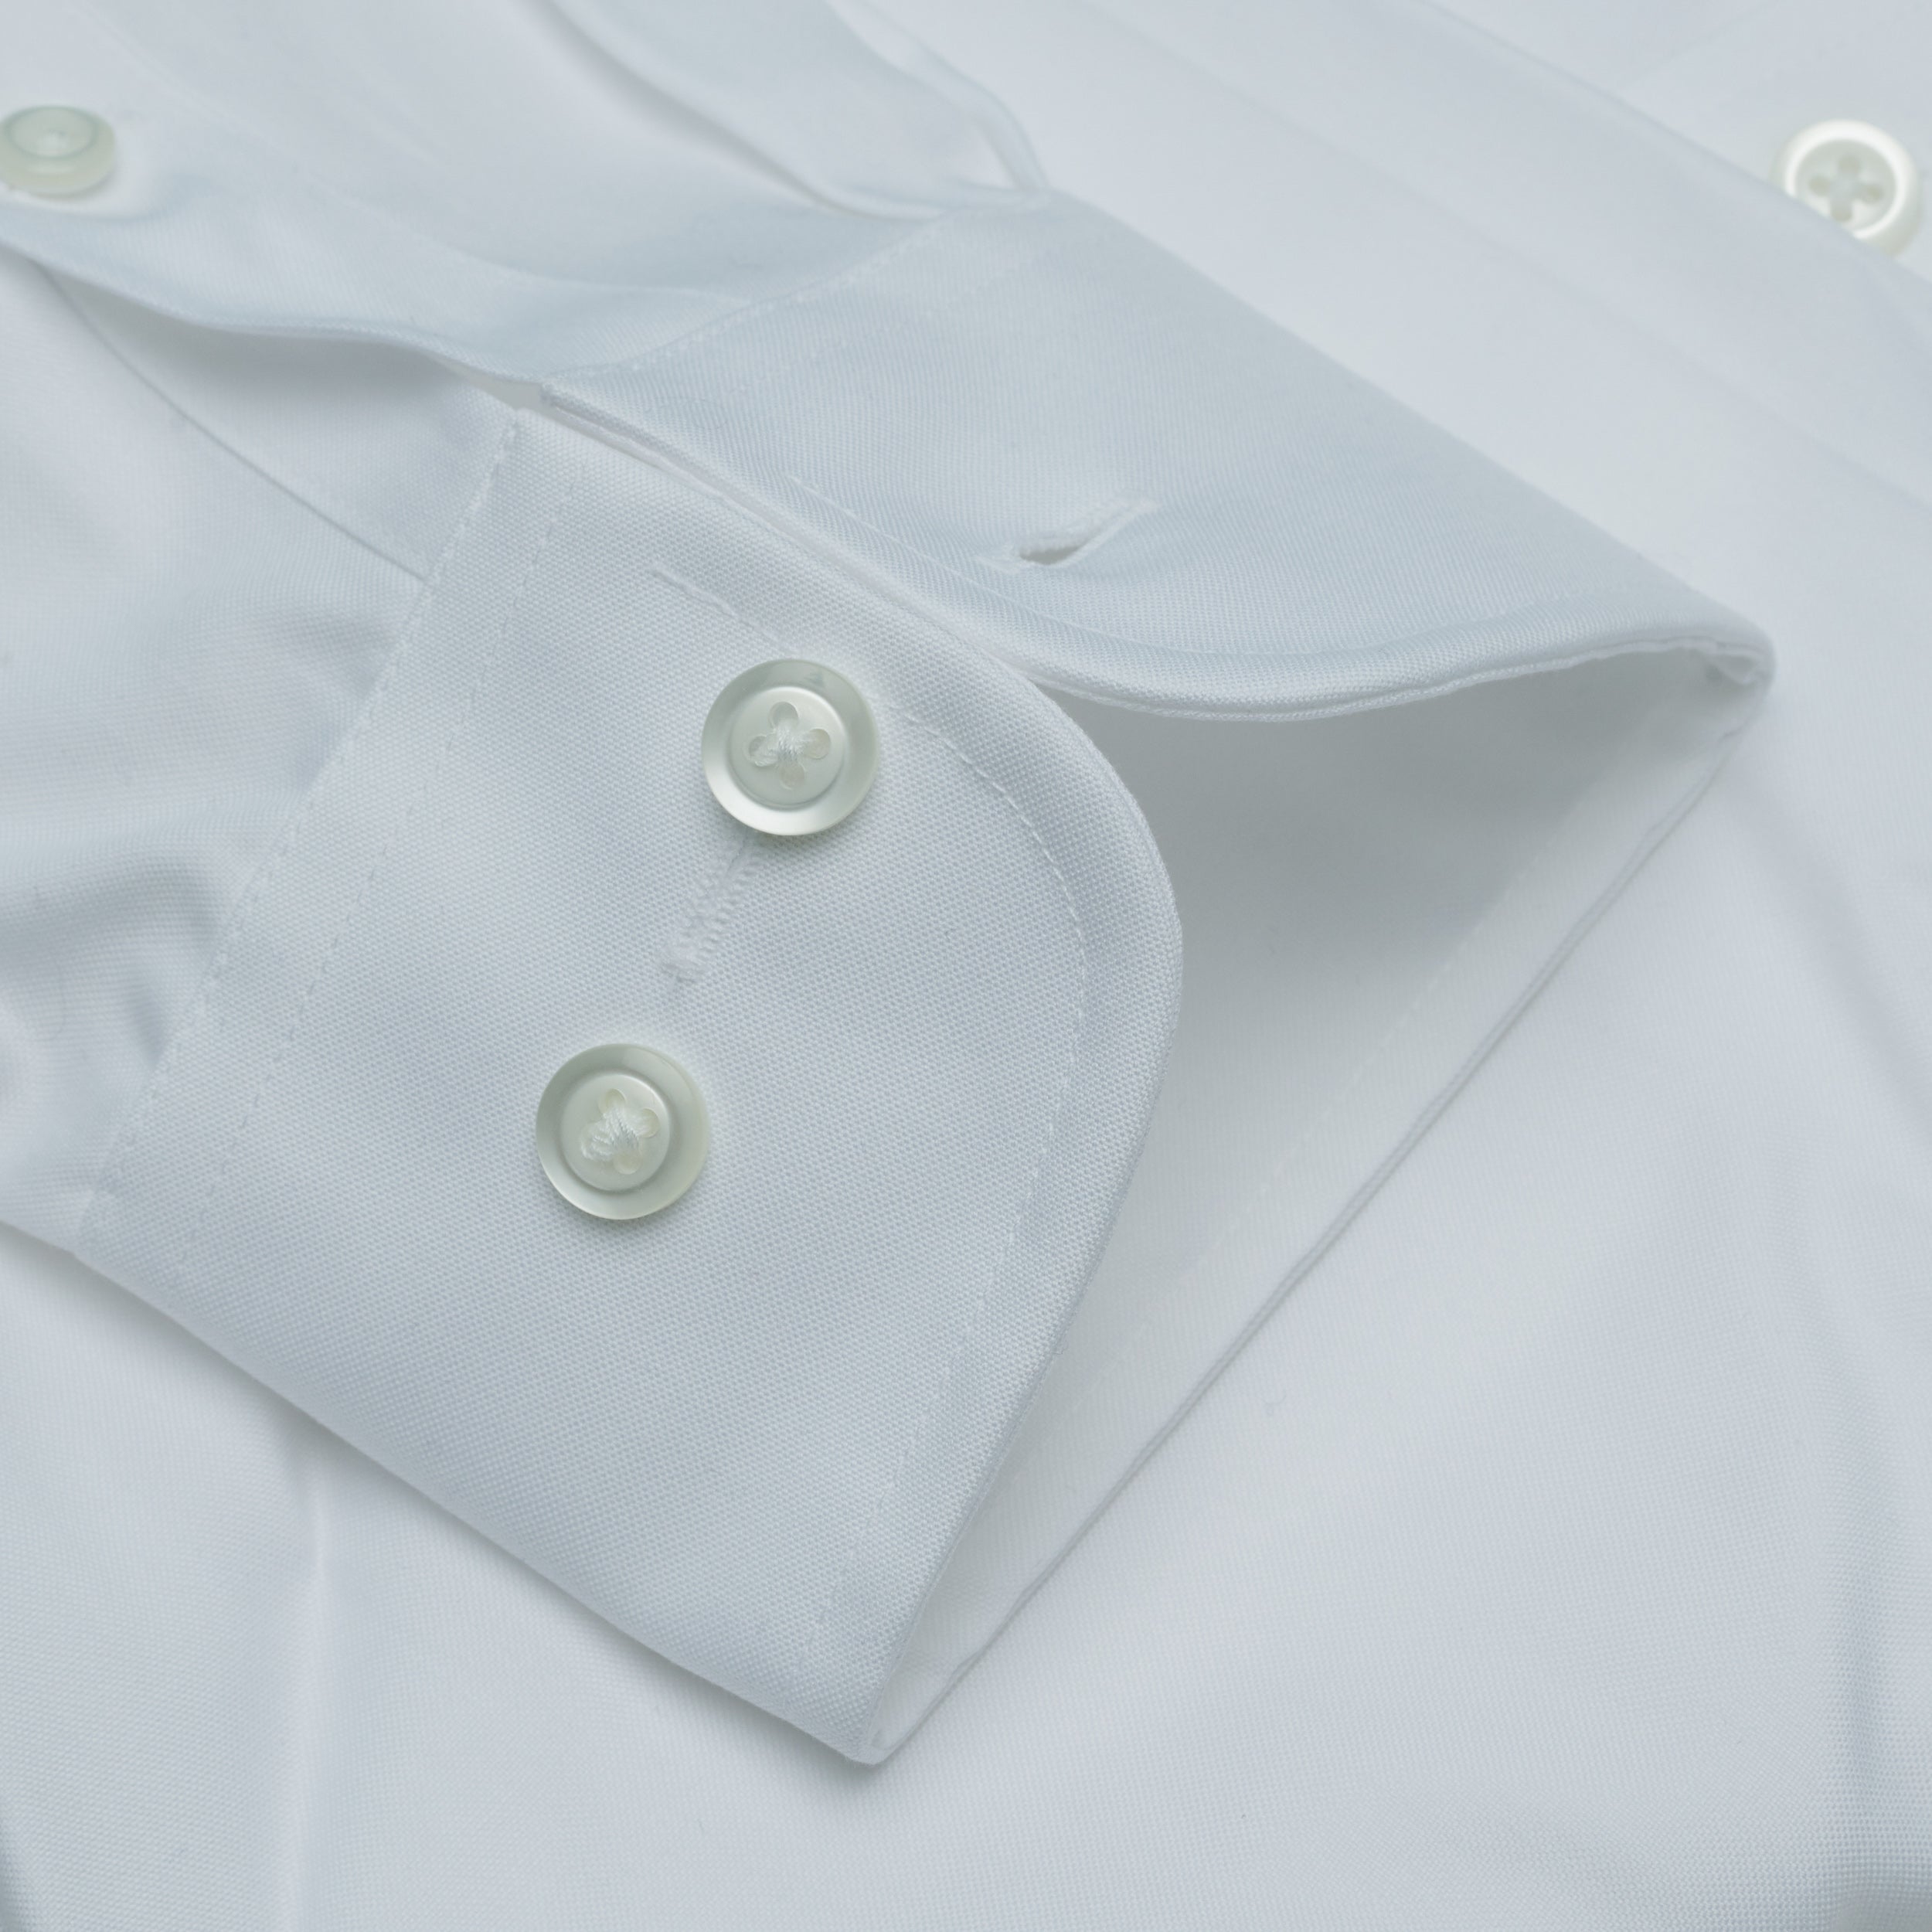 040 TF SC - Stretch White Tailored Fit Spread Collar (95/5)